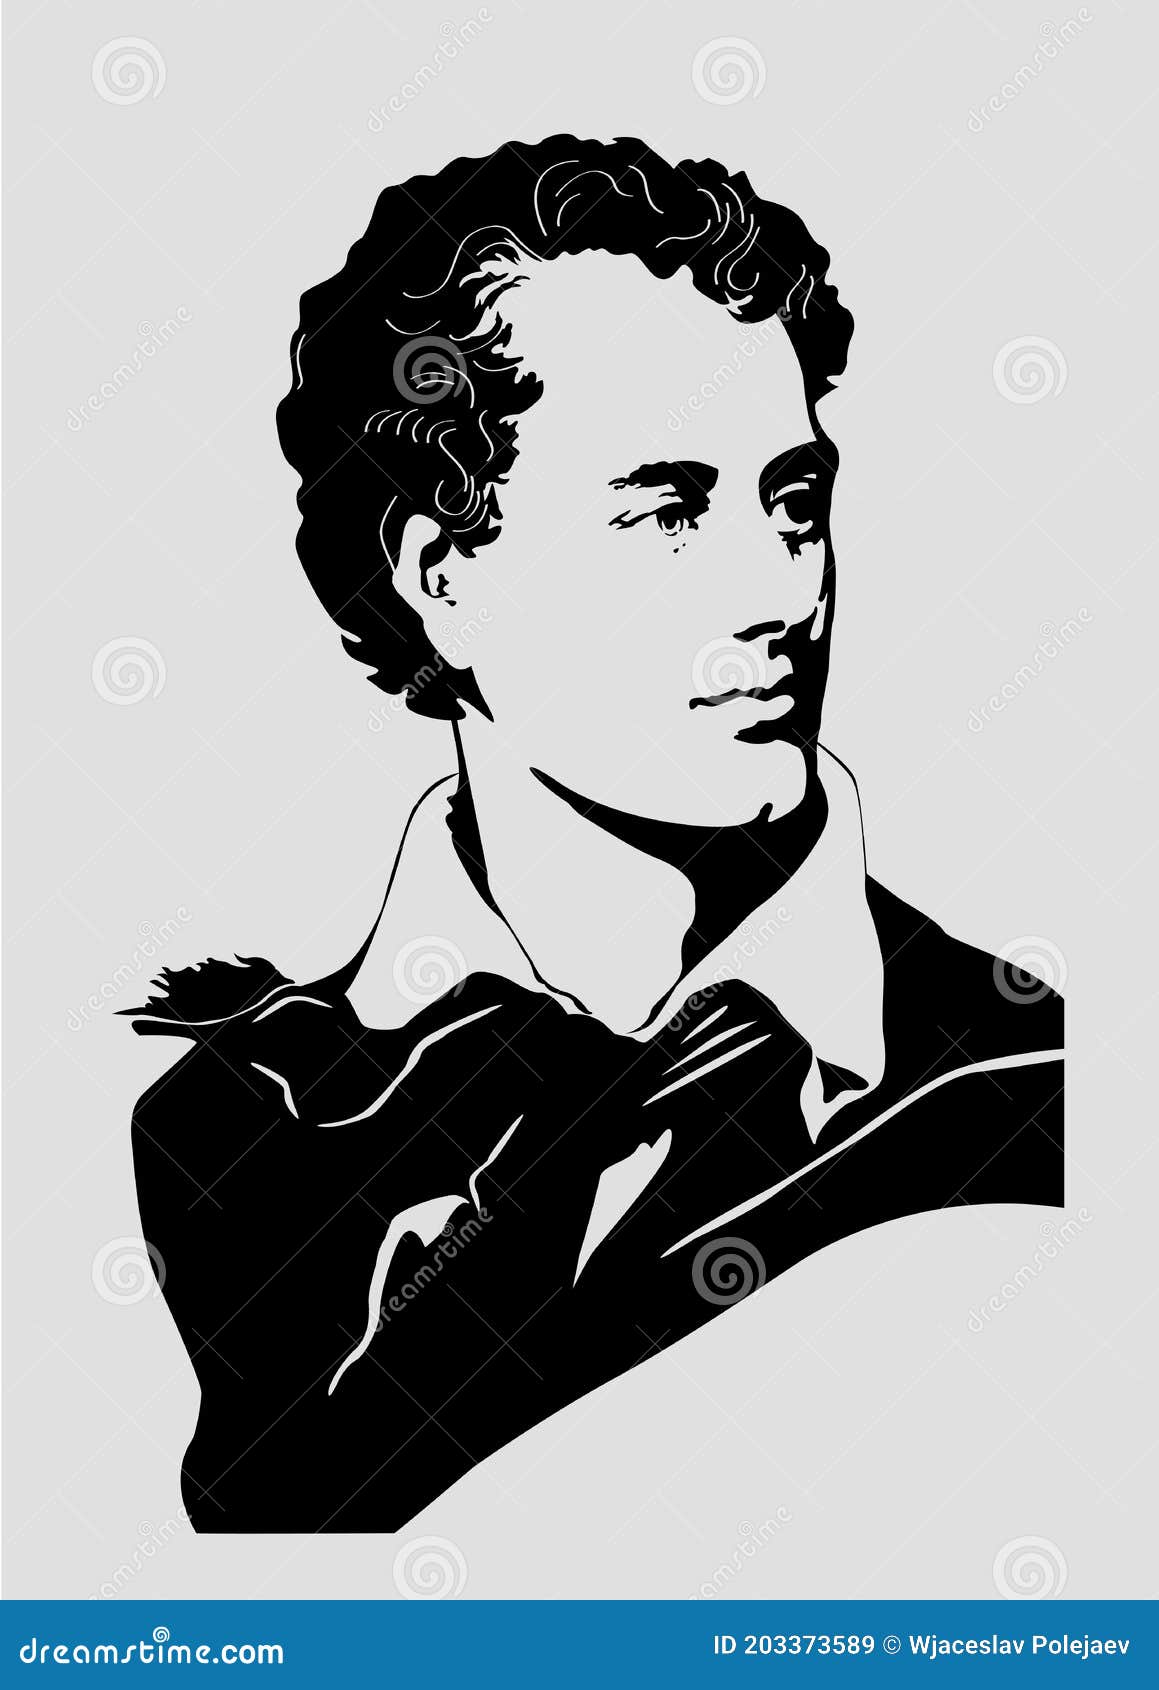 Lord Byron - poeta inglês